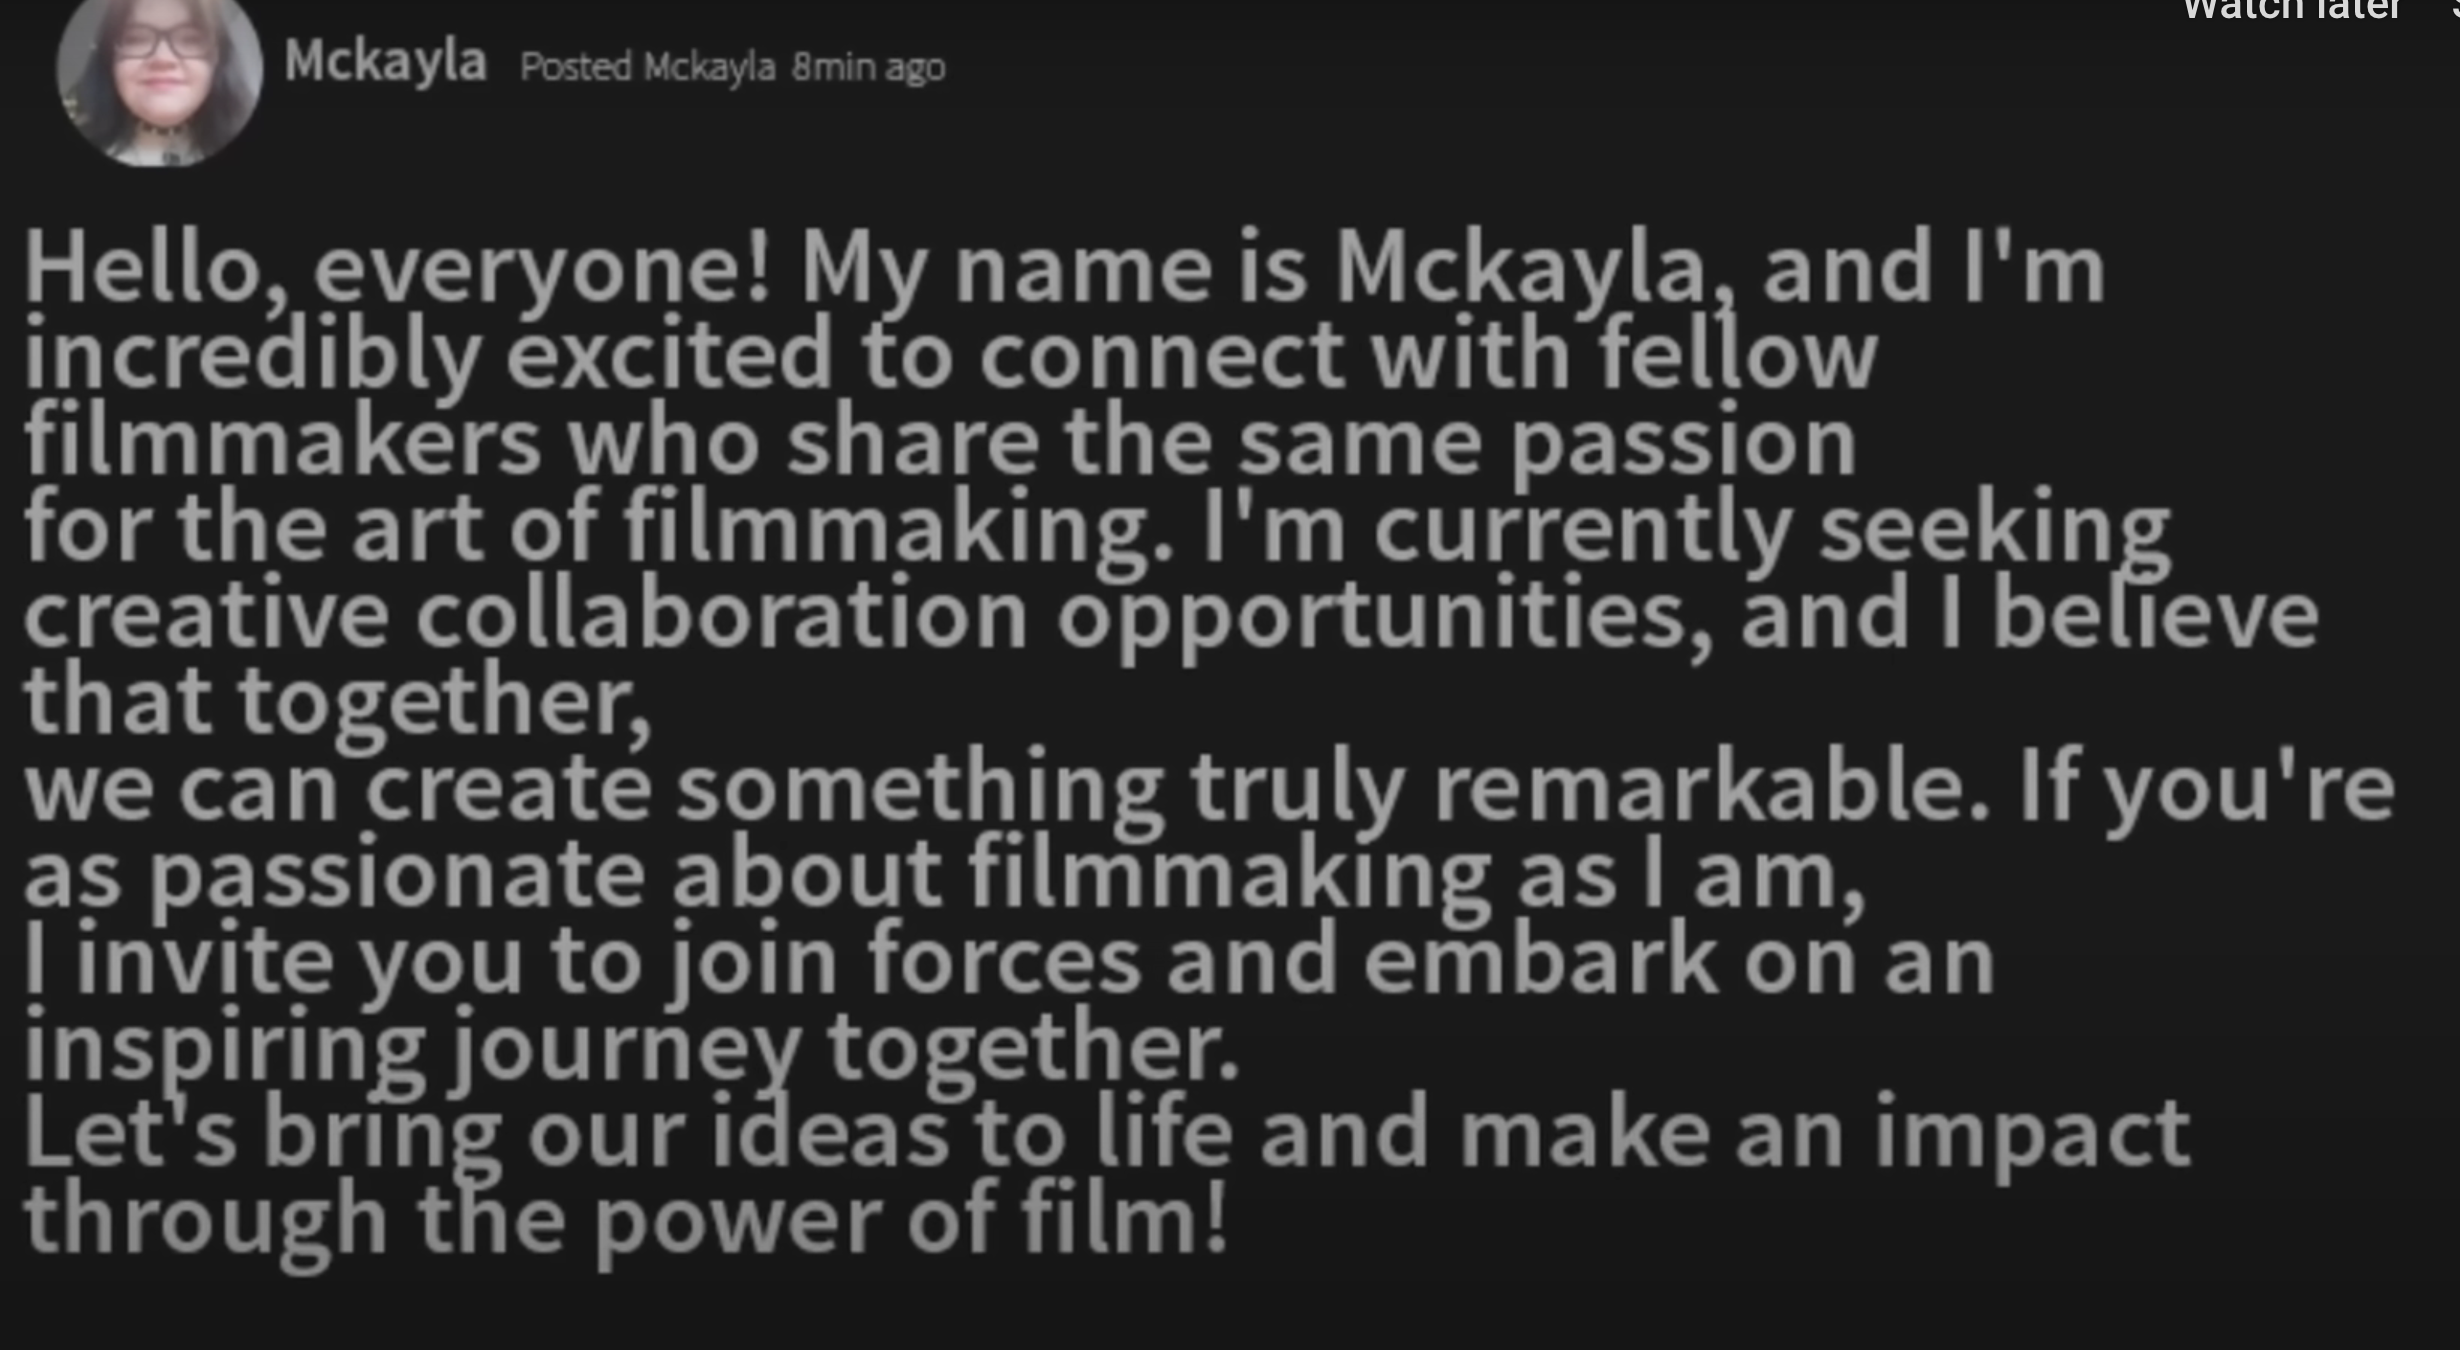 McKayla&#x27;s forum post introducing herself online